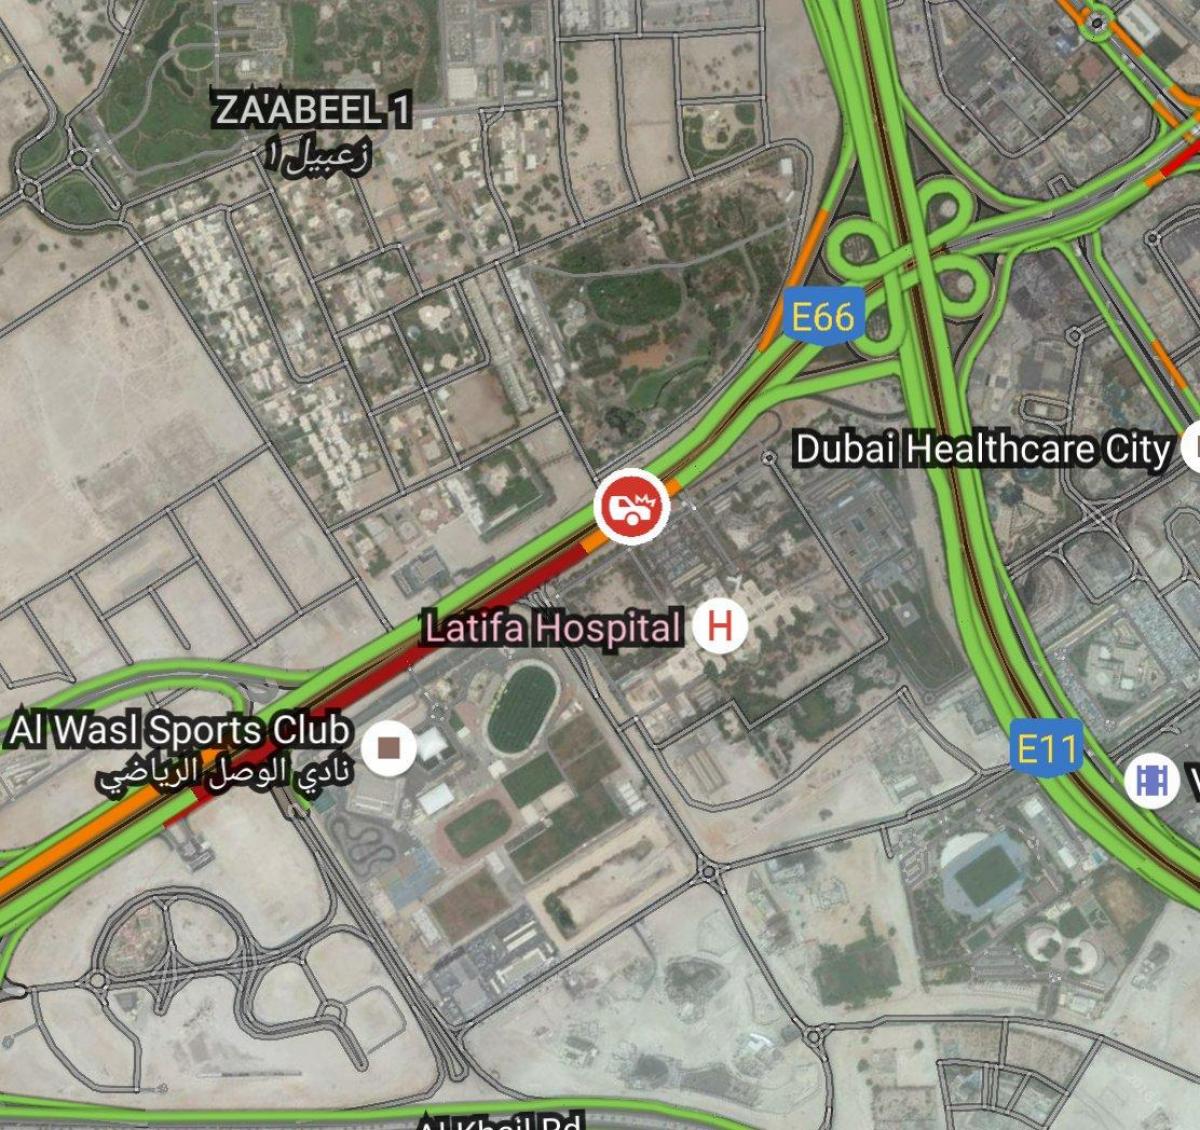 latifa nemocnice Dubaj polohy na mape